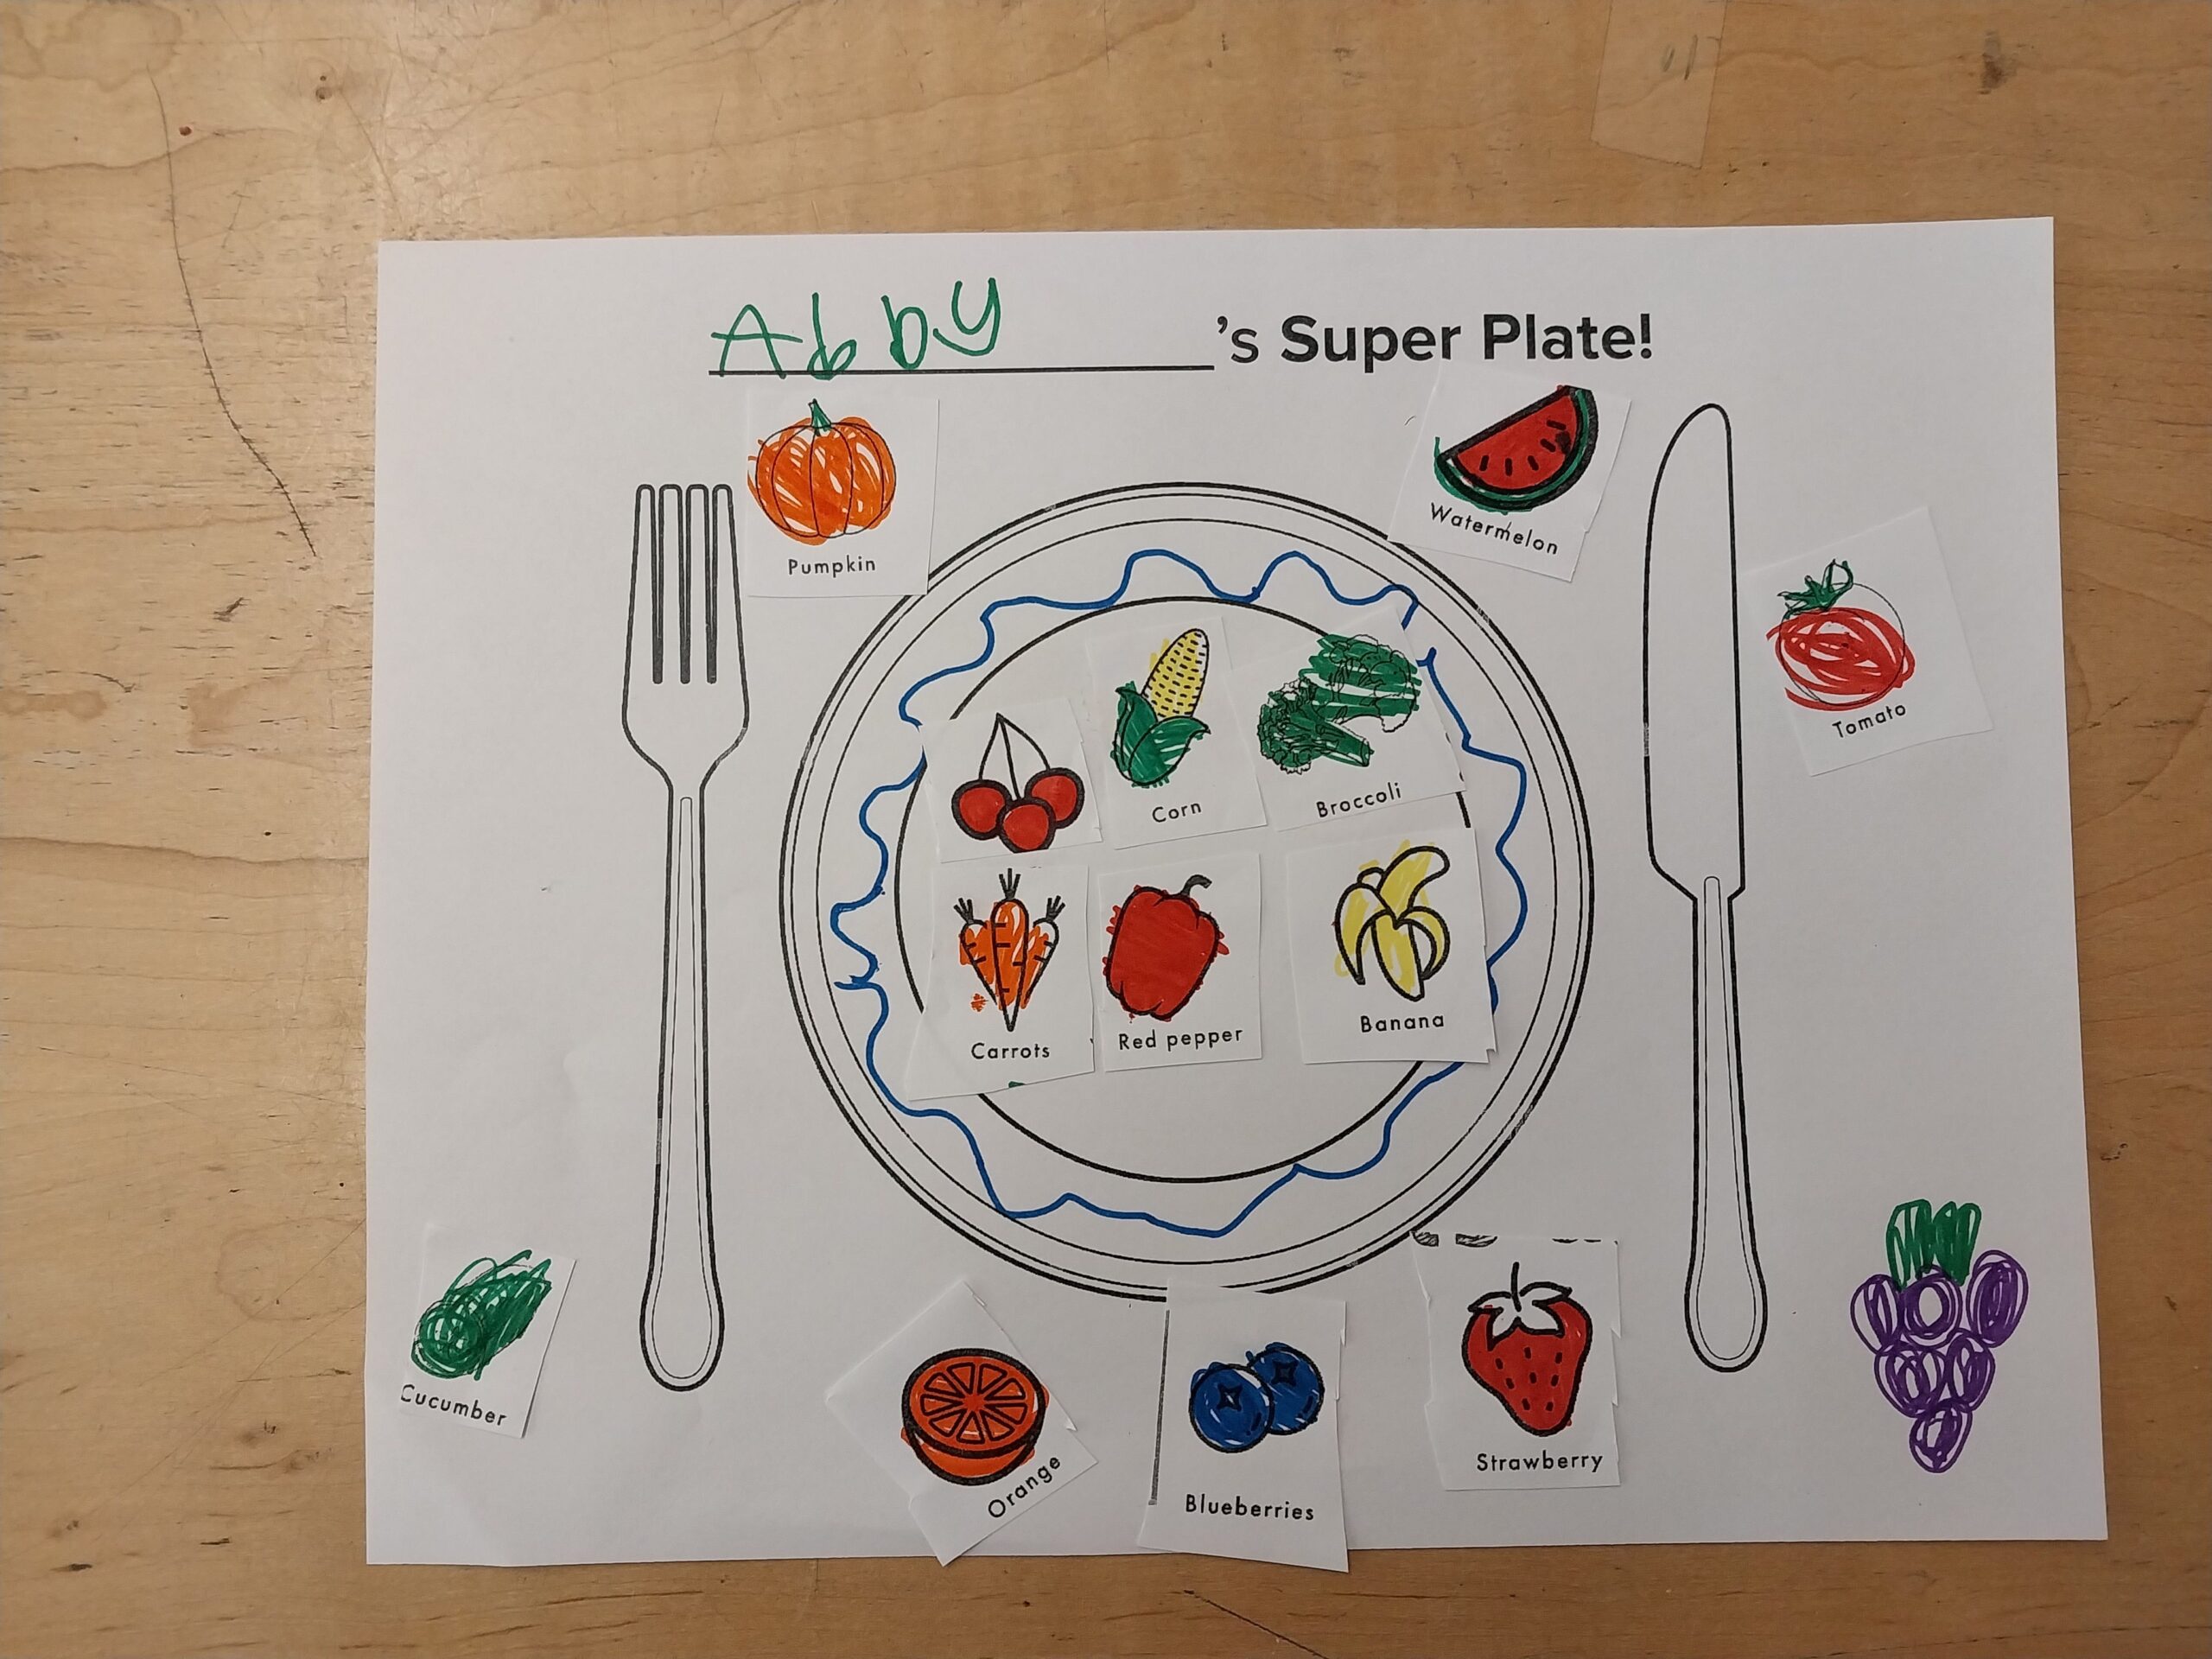 Fieldston Lower student's superfood plate.